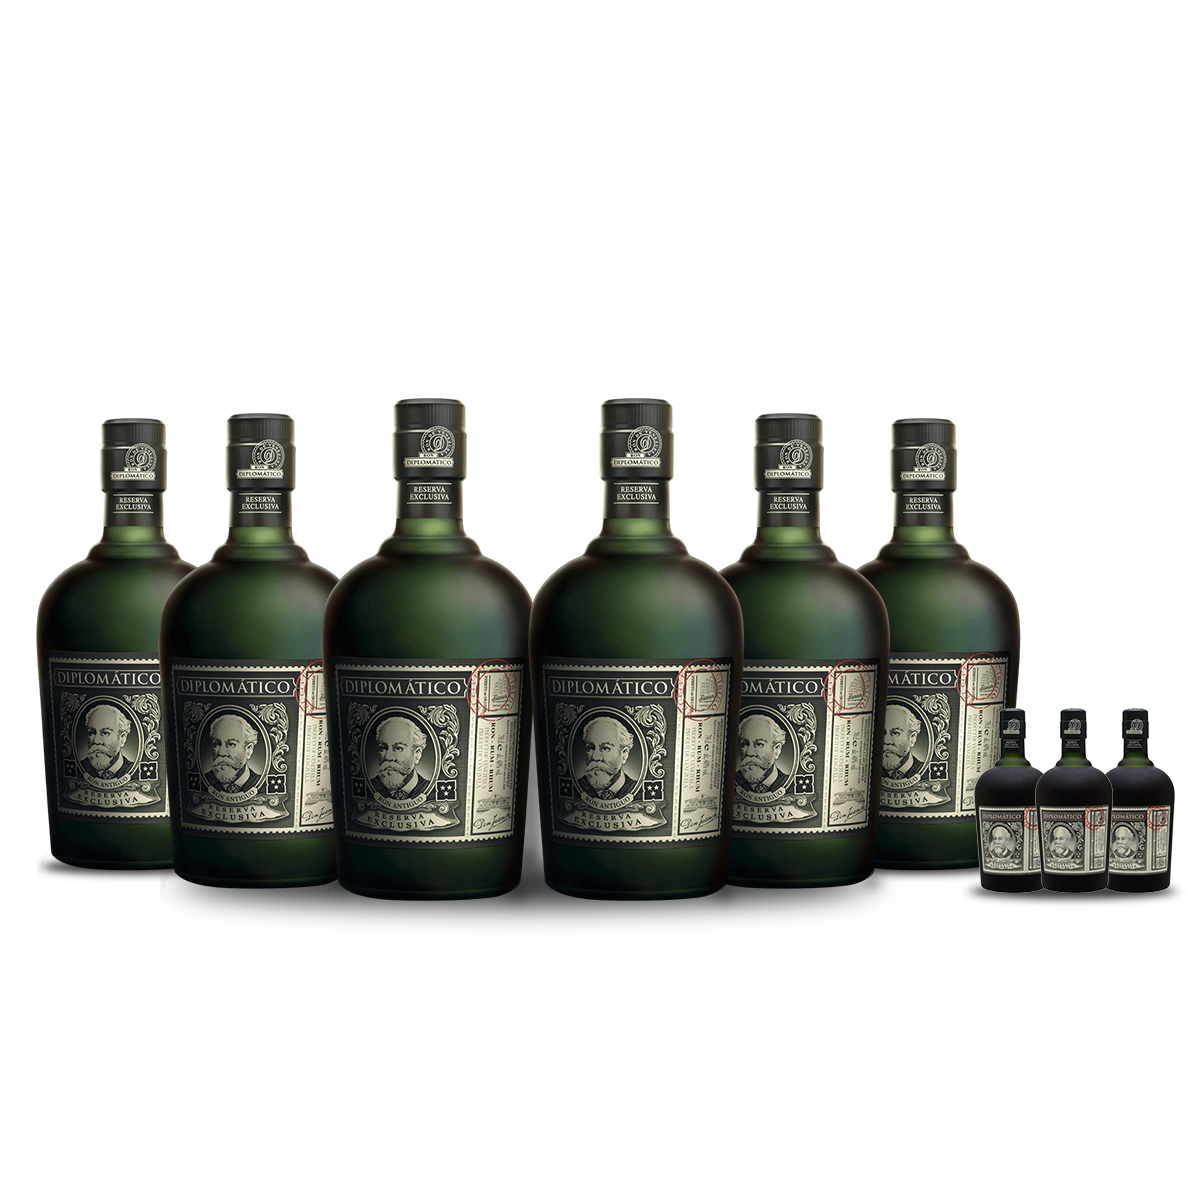 BUY] Diplomático Reserva Exclusiva Rum (6) Bottle Bundle w/free minis at